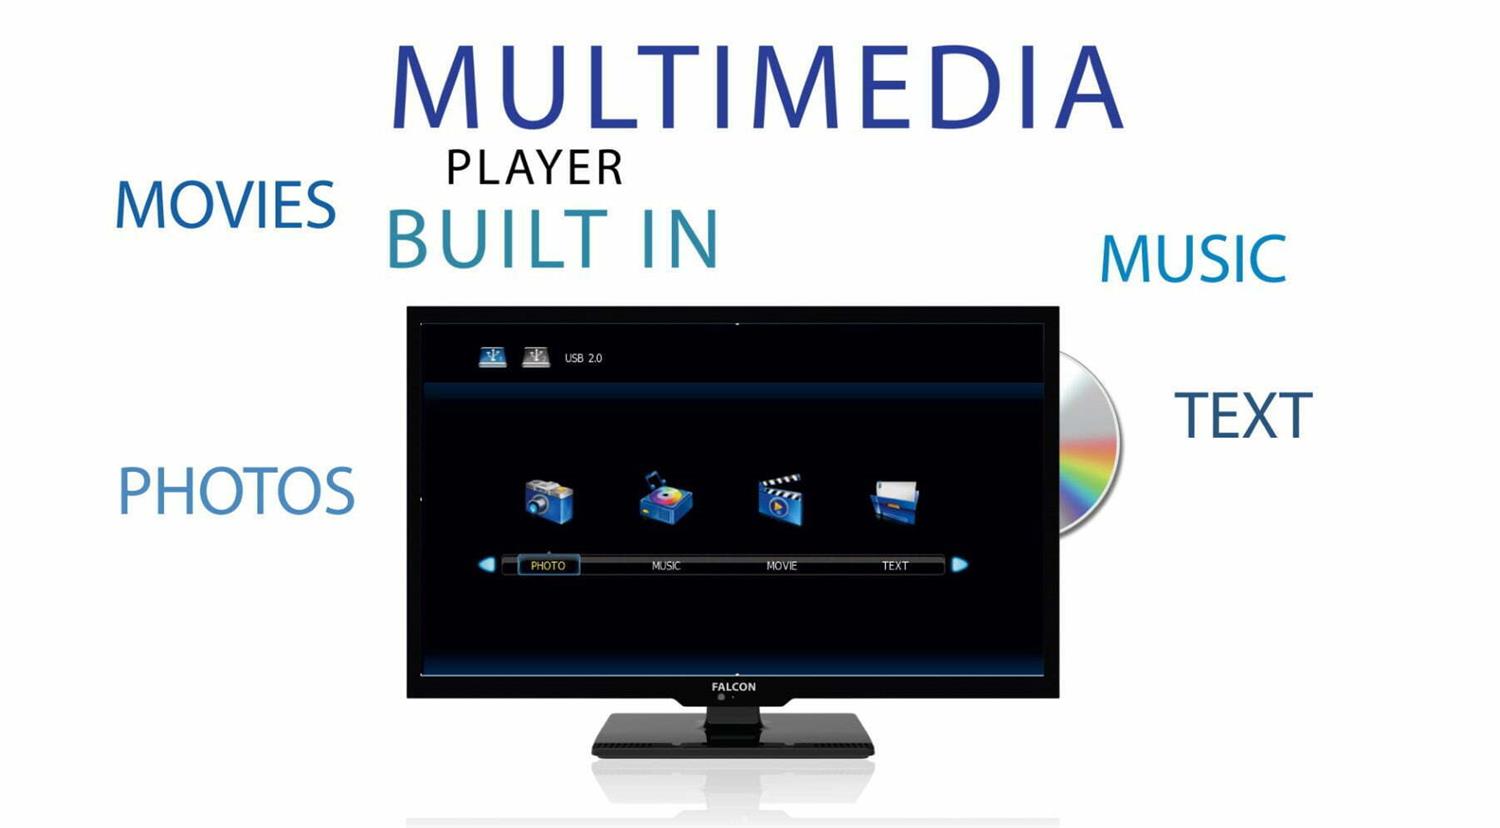 Multimedia player